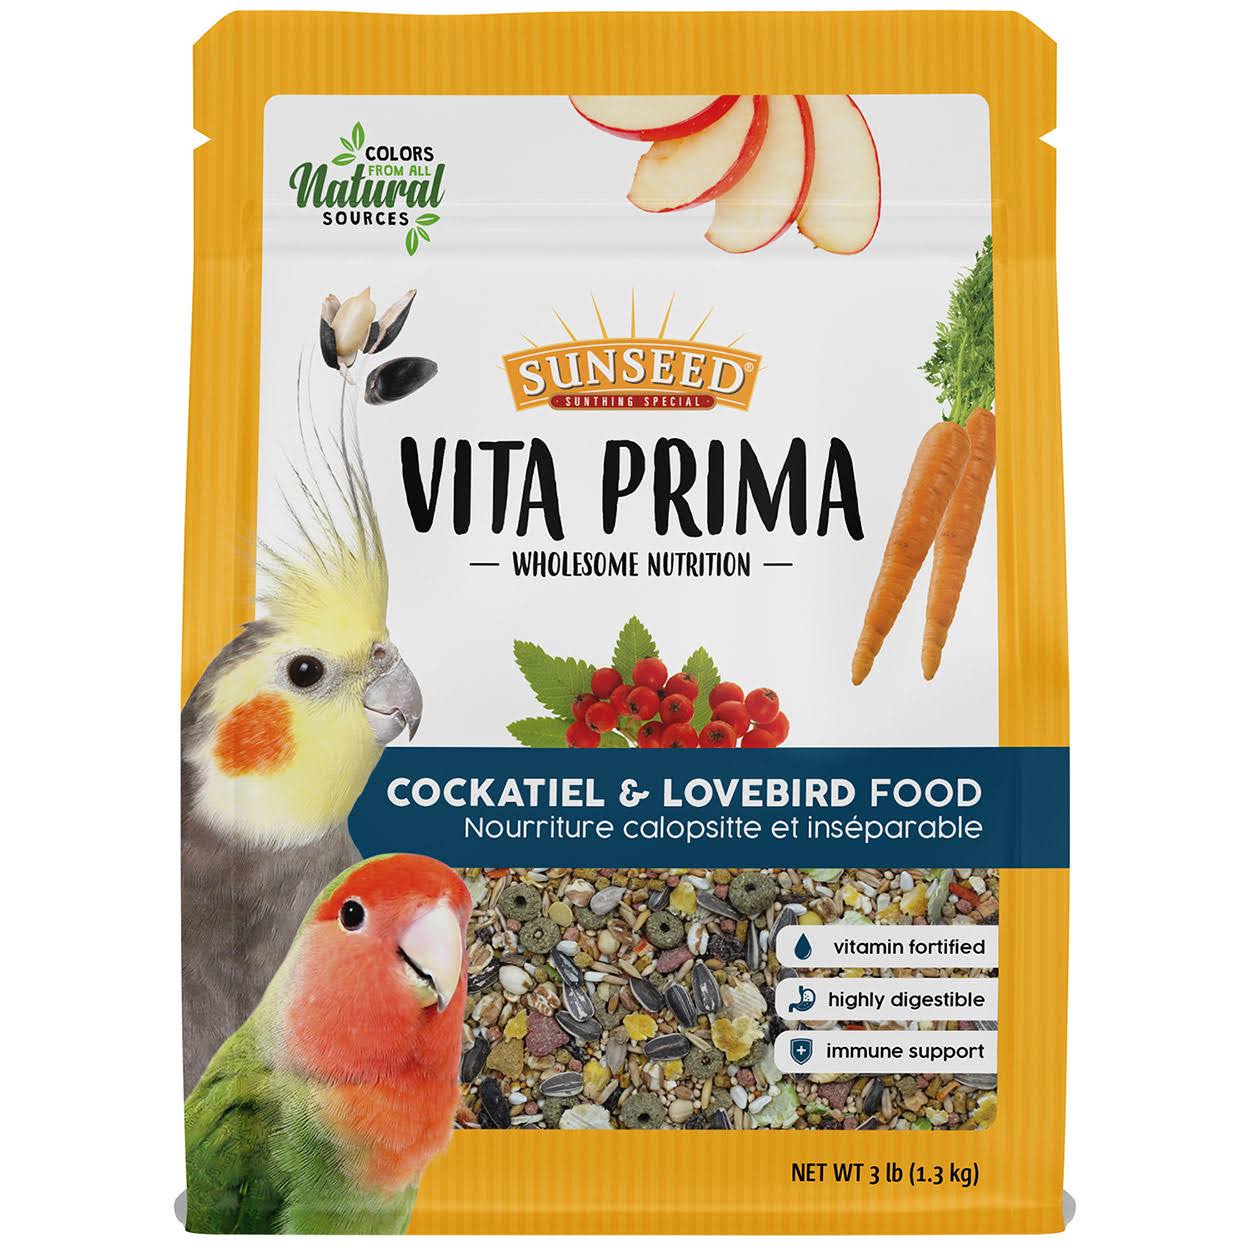 Sunseed Vita Prima Cockatiel & Lovebird Food, 3-lb